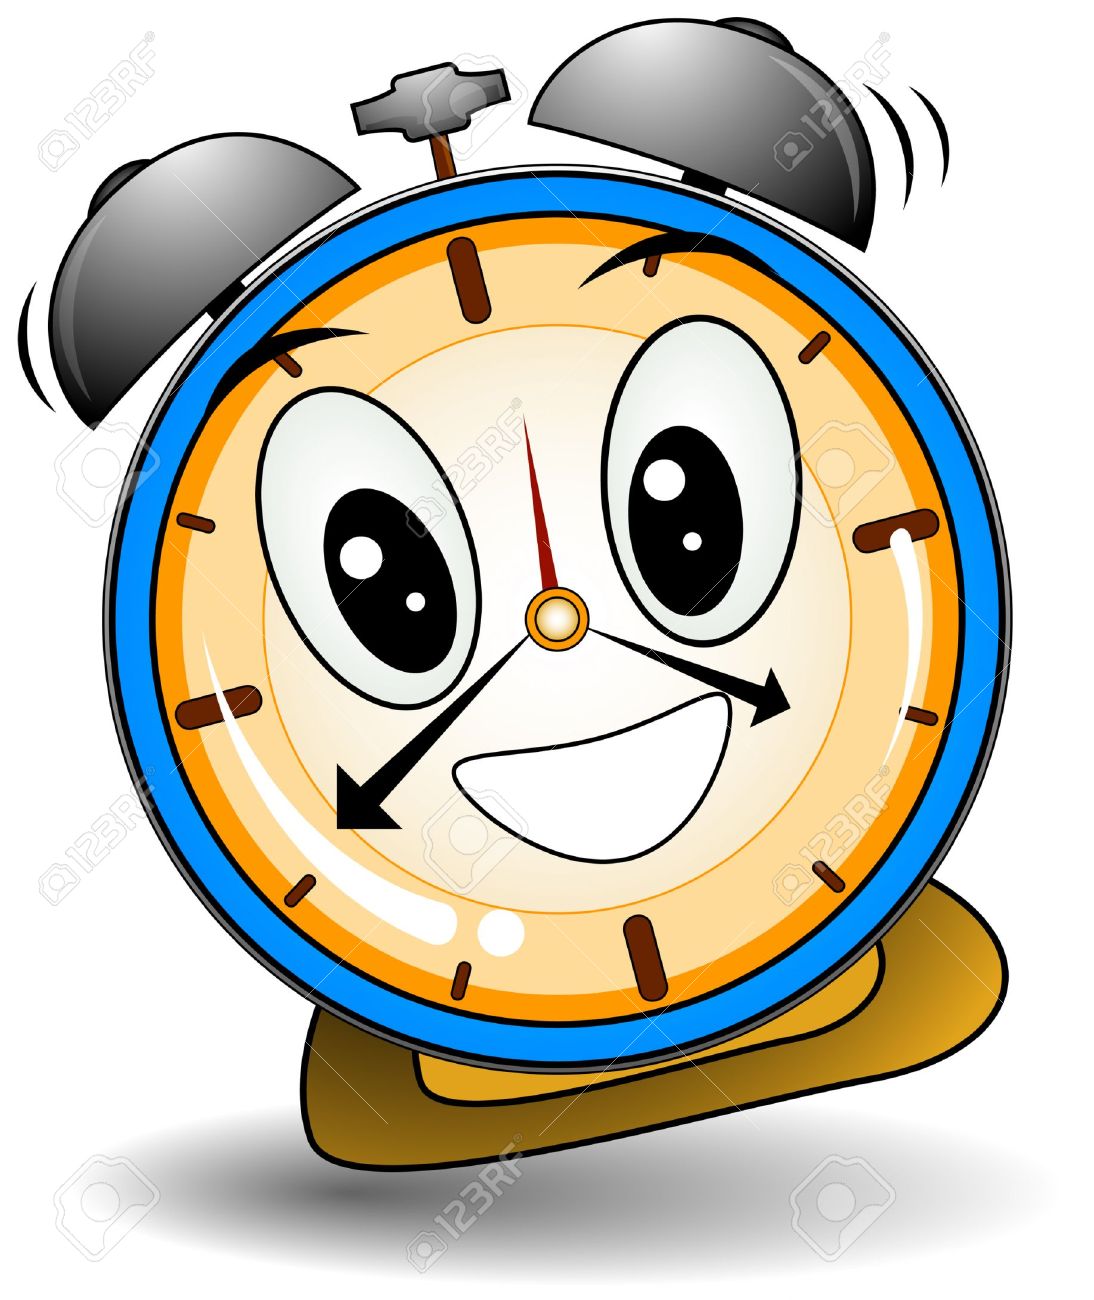 clip art cartoon clocks - photo #10